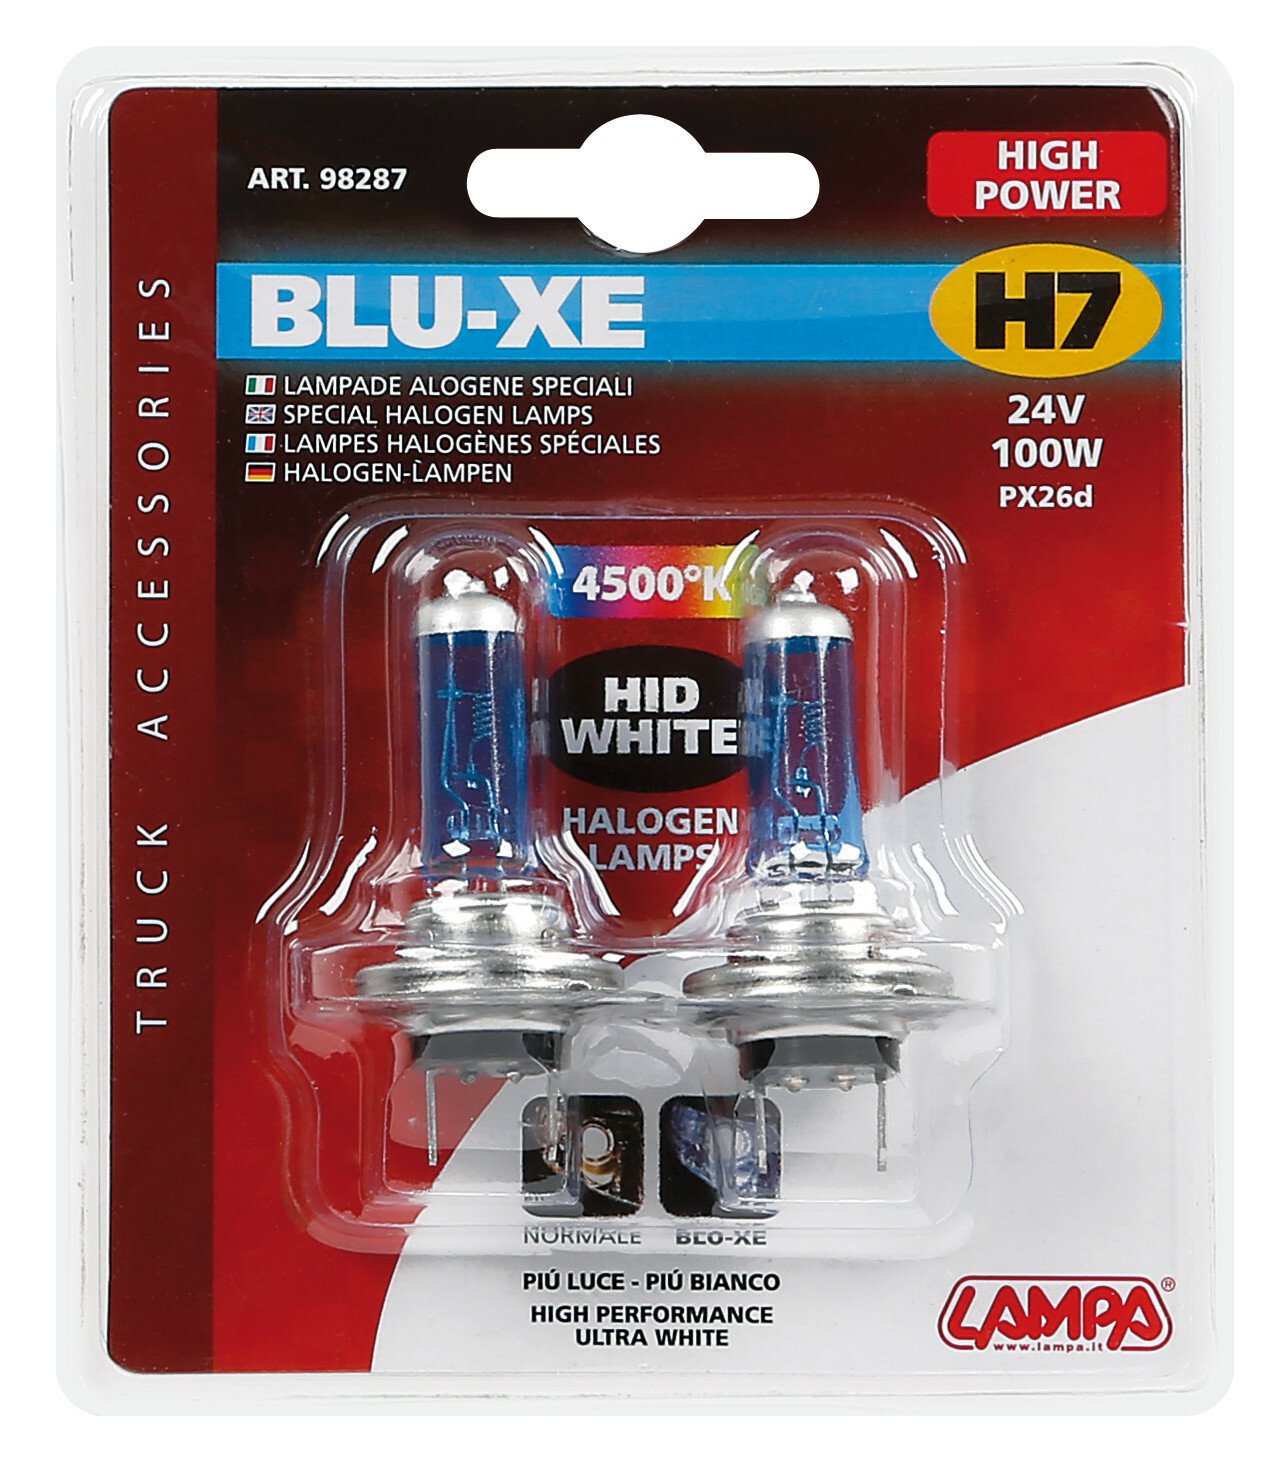 24V Blu-Xe halogen lamp - H7 - 100W - PX26d - 2 pcs thumb